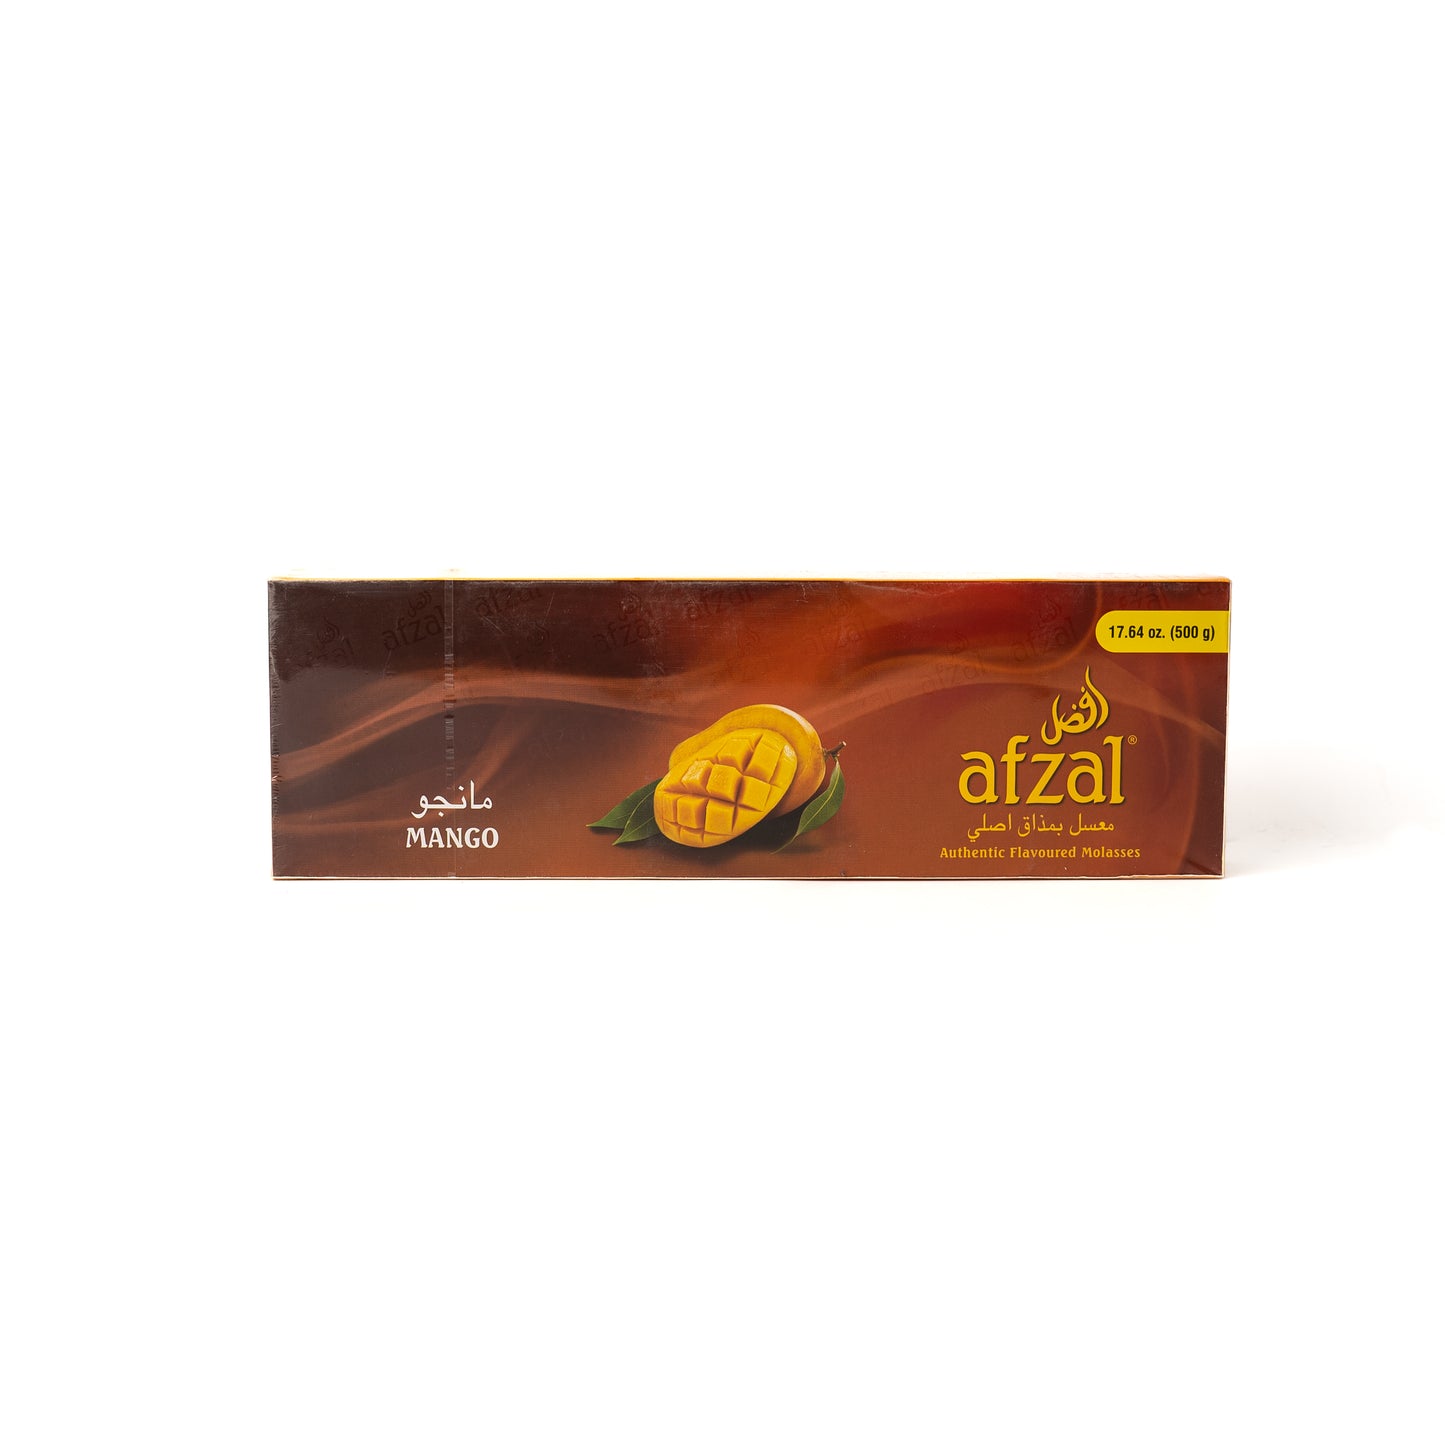 Afzal Mango Hookah Flavor - 50g